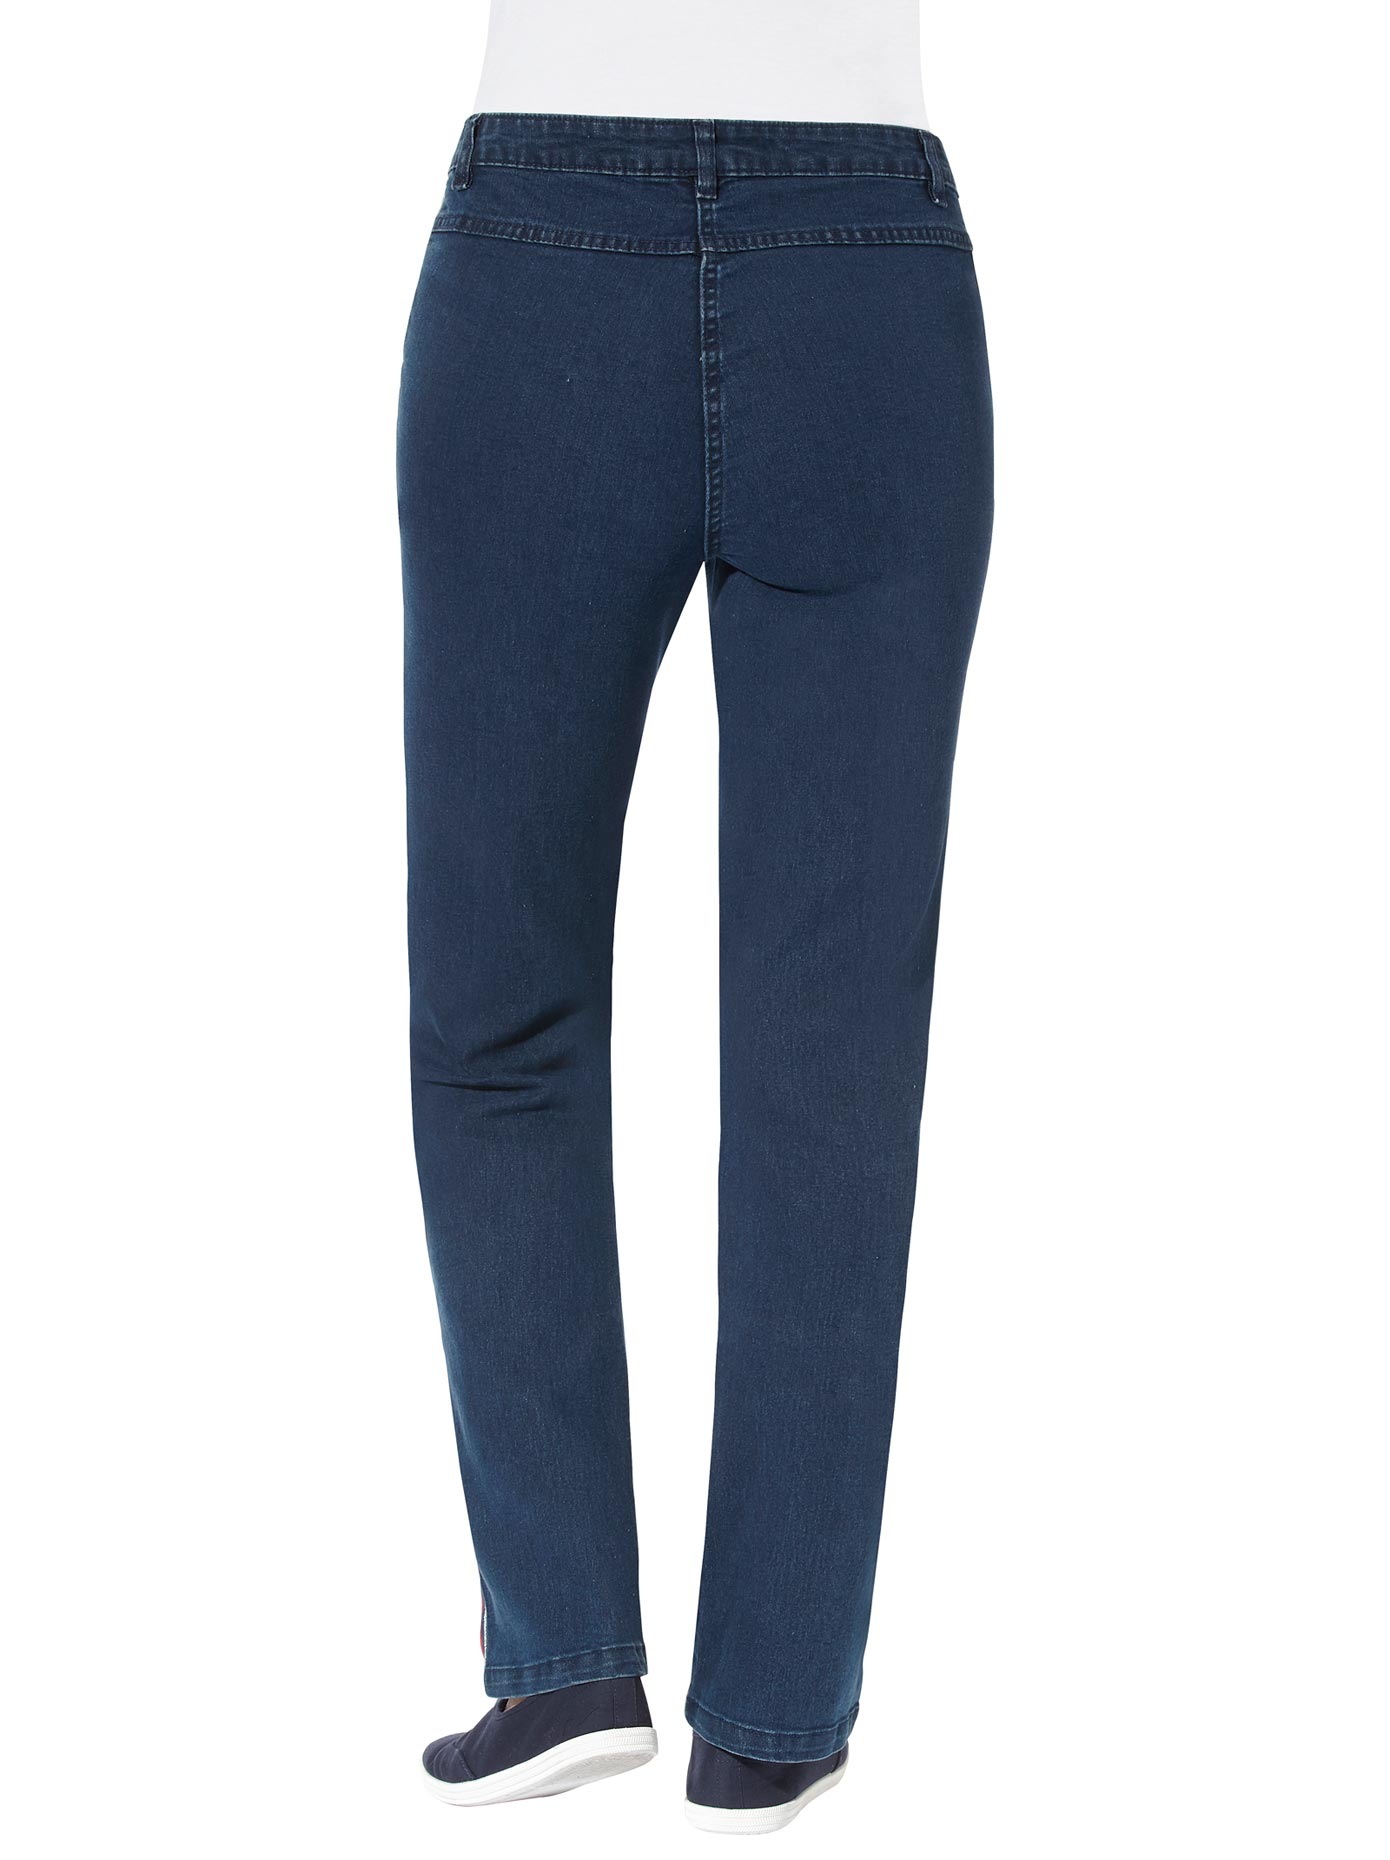 Classic Basics Bequeme Jeans